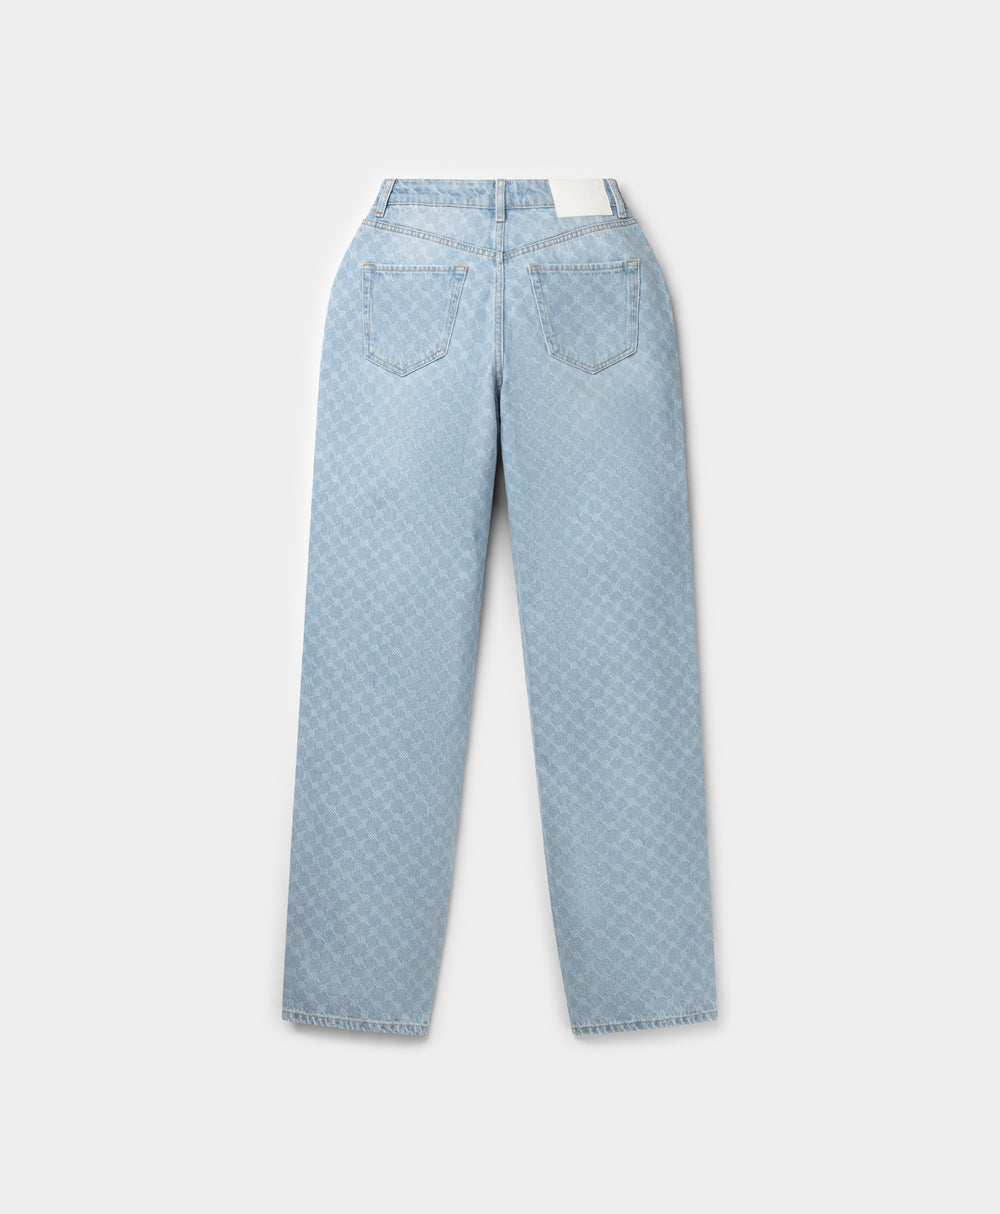 DP - Mid Blue Avery Monogram Jeans - Packshot - Rear